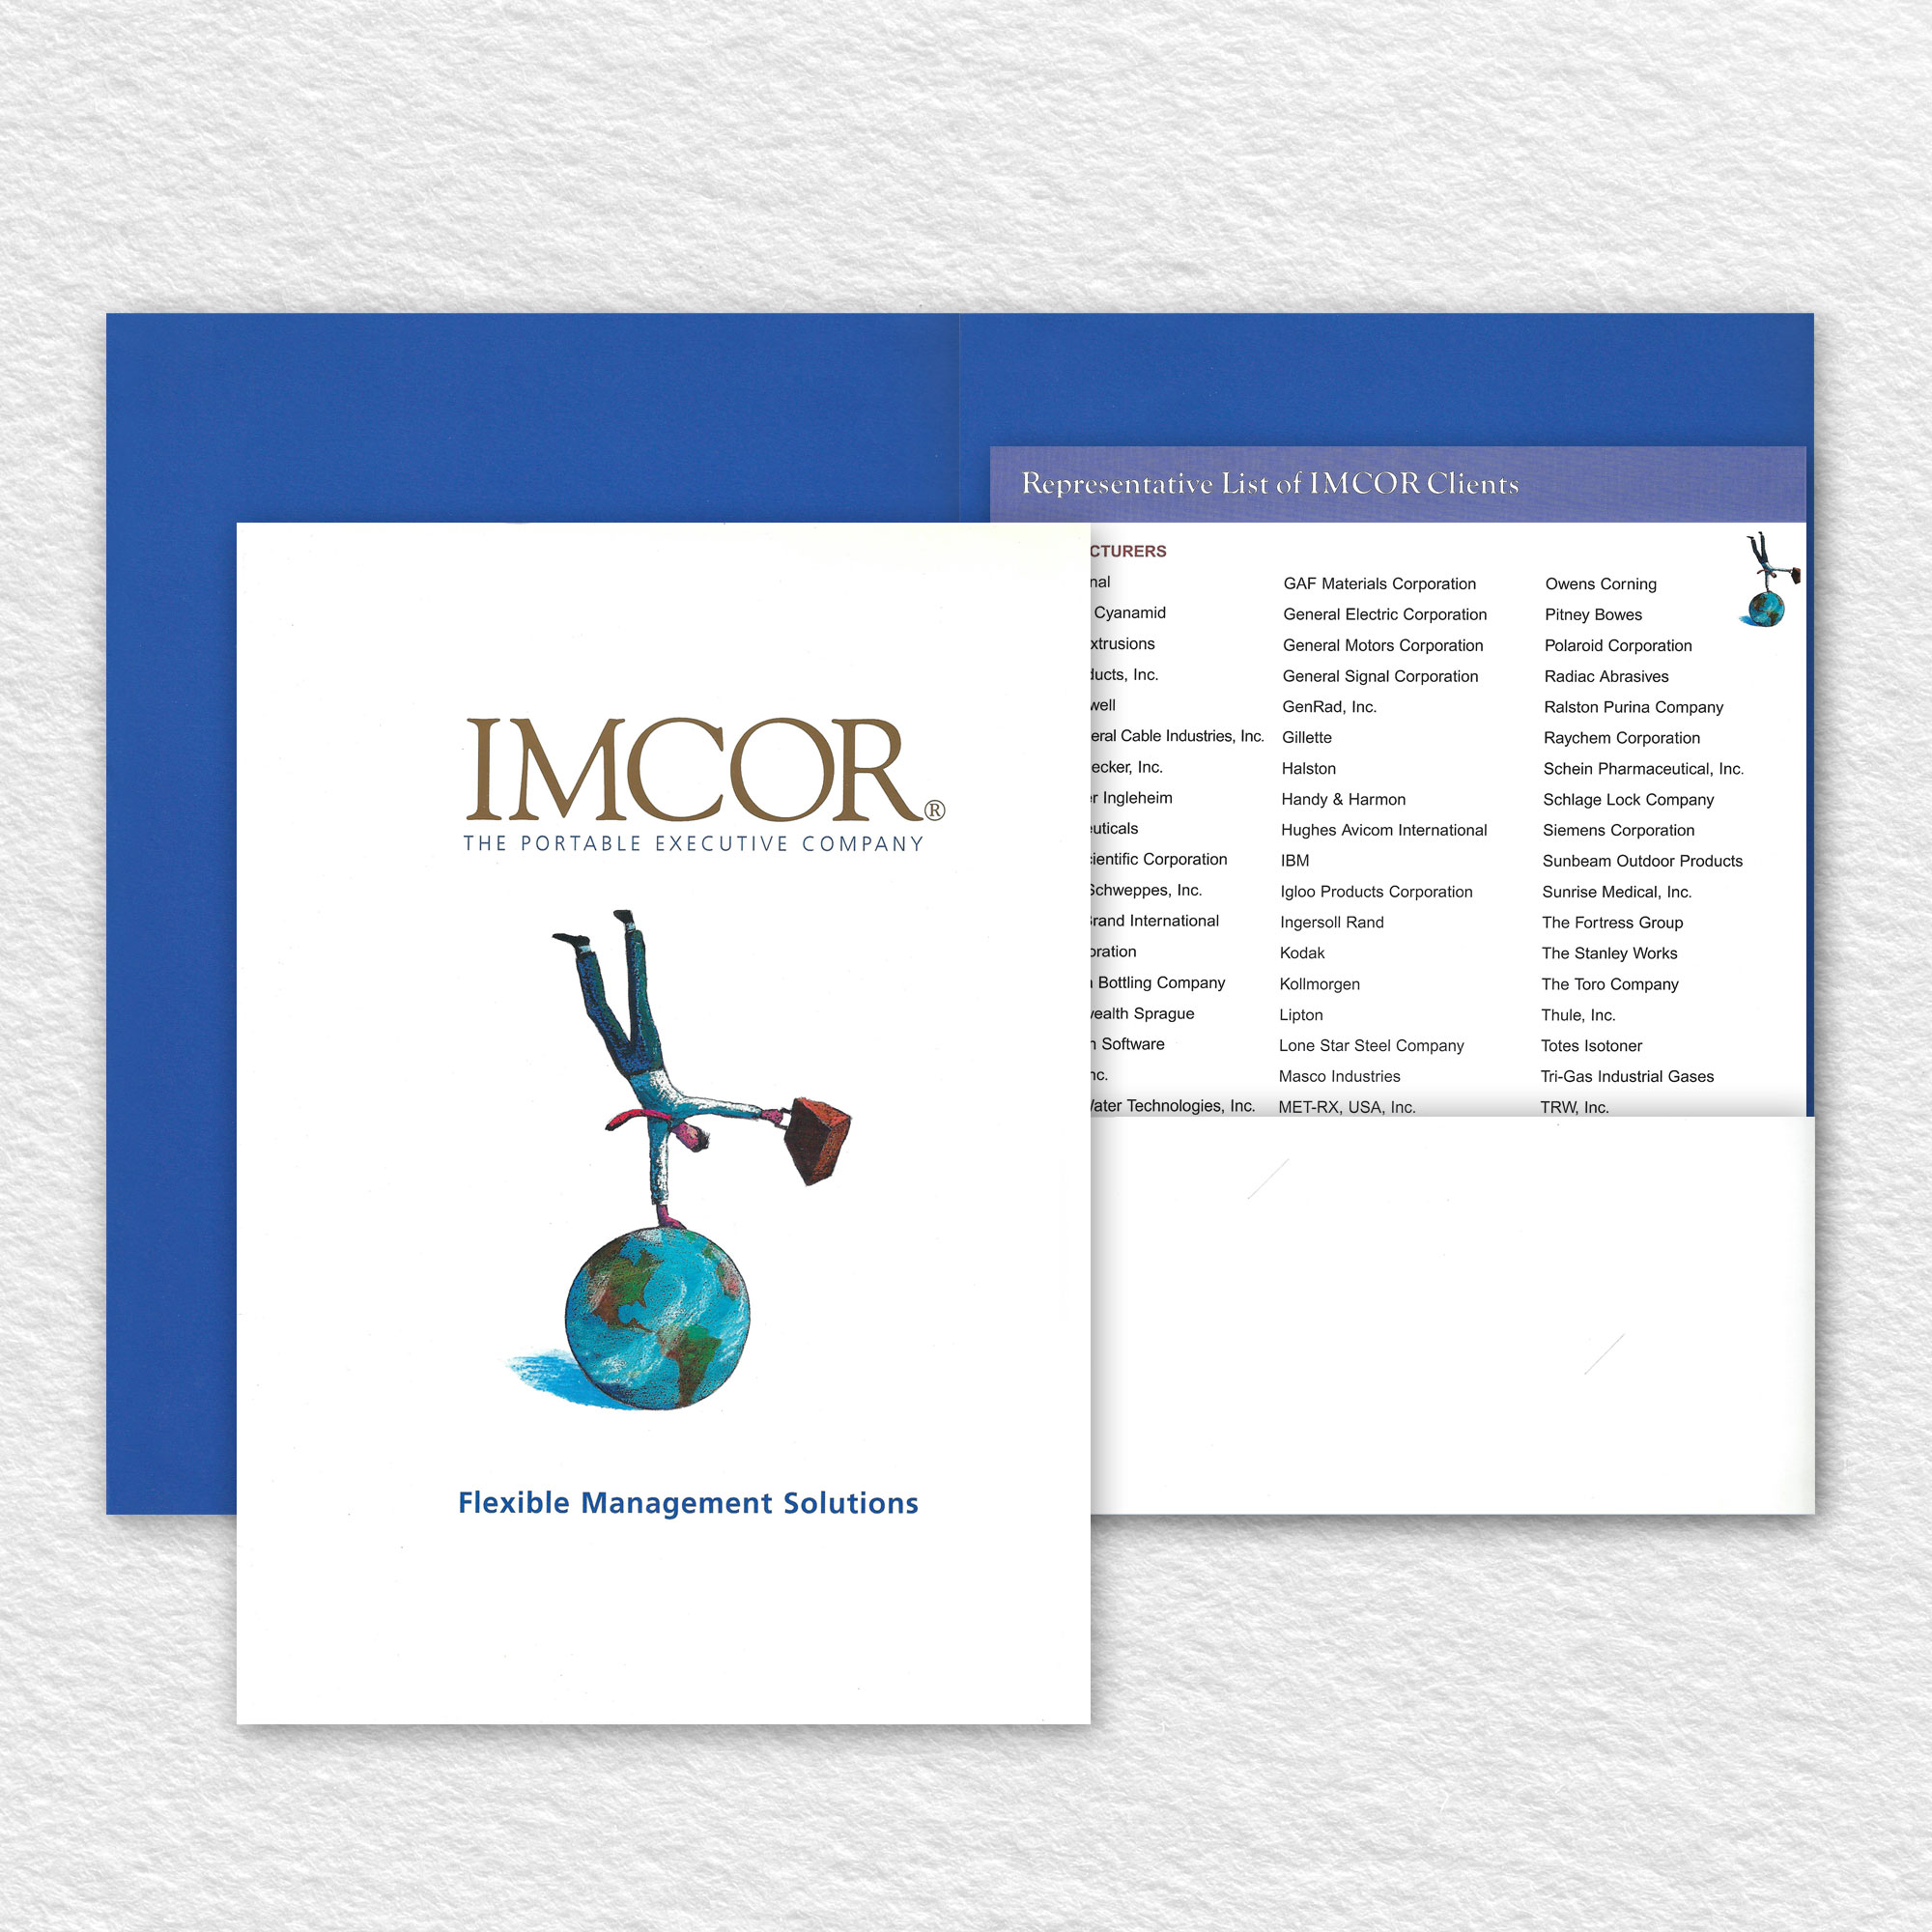 IMCOR Success Story images Corporate folder